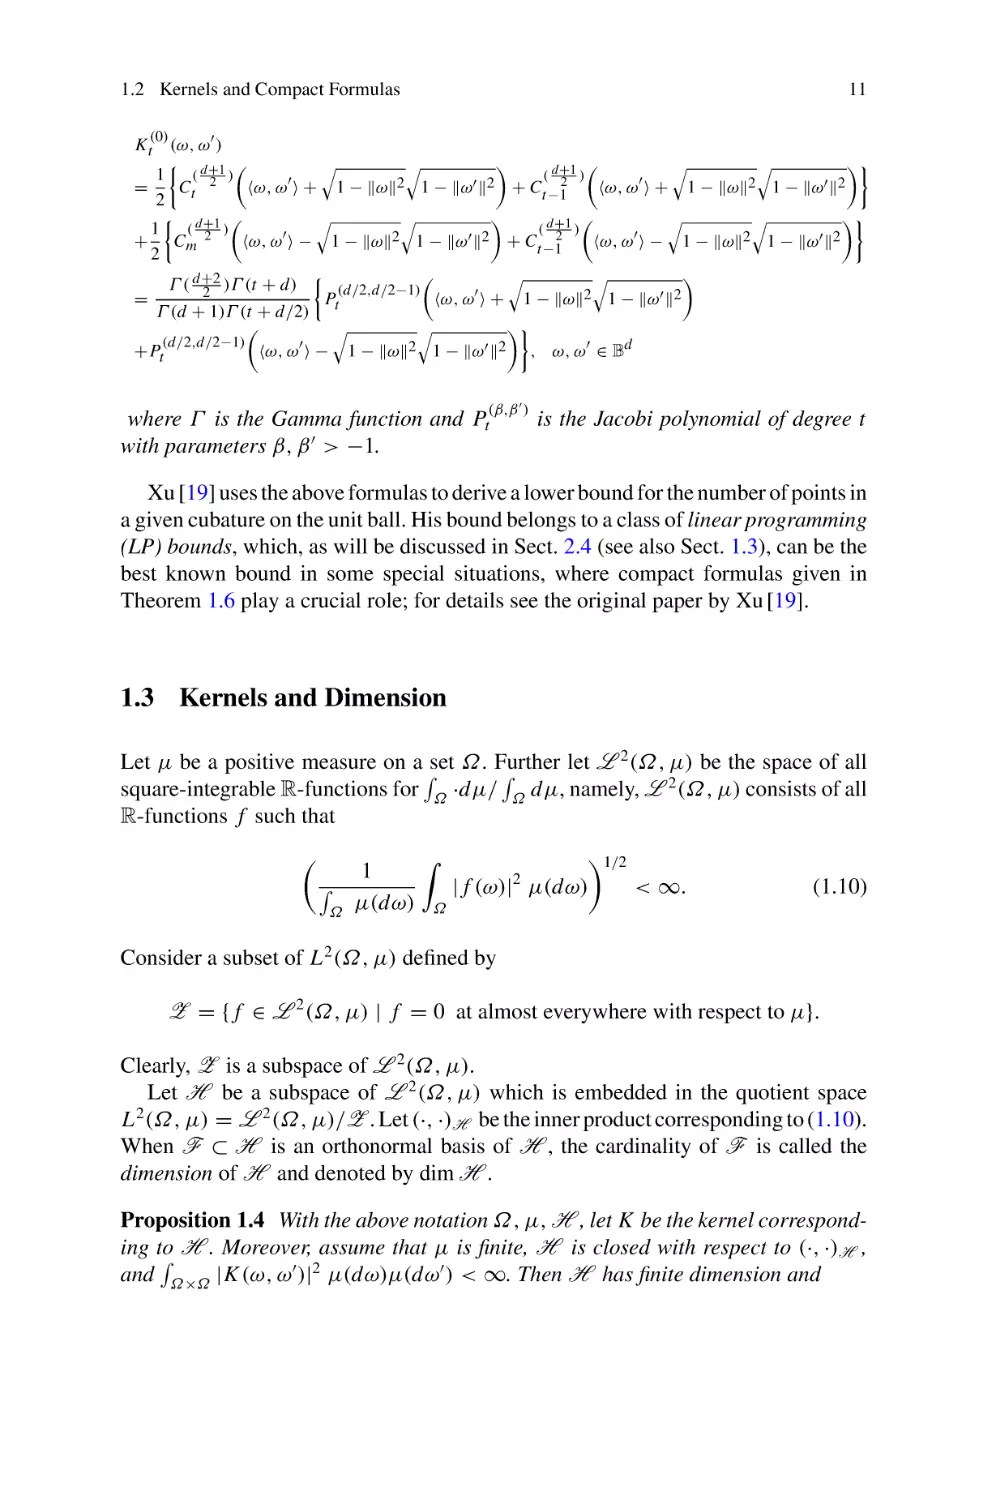 1.3 Kernels and Dimension